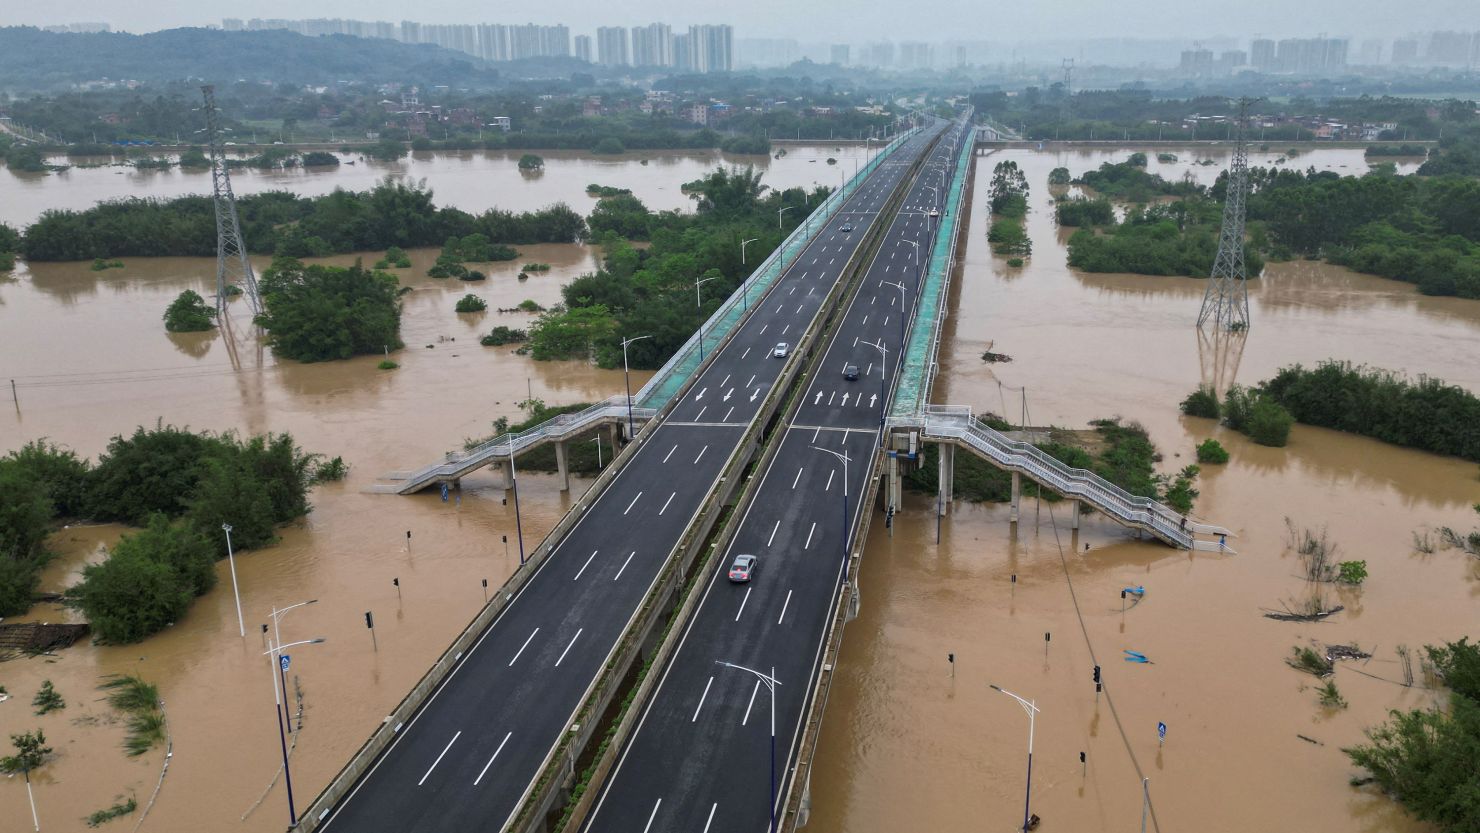 Southern China: Massive floods threaten tens of millions as intense rains  batter country | CNN